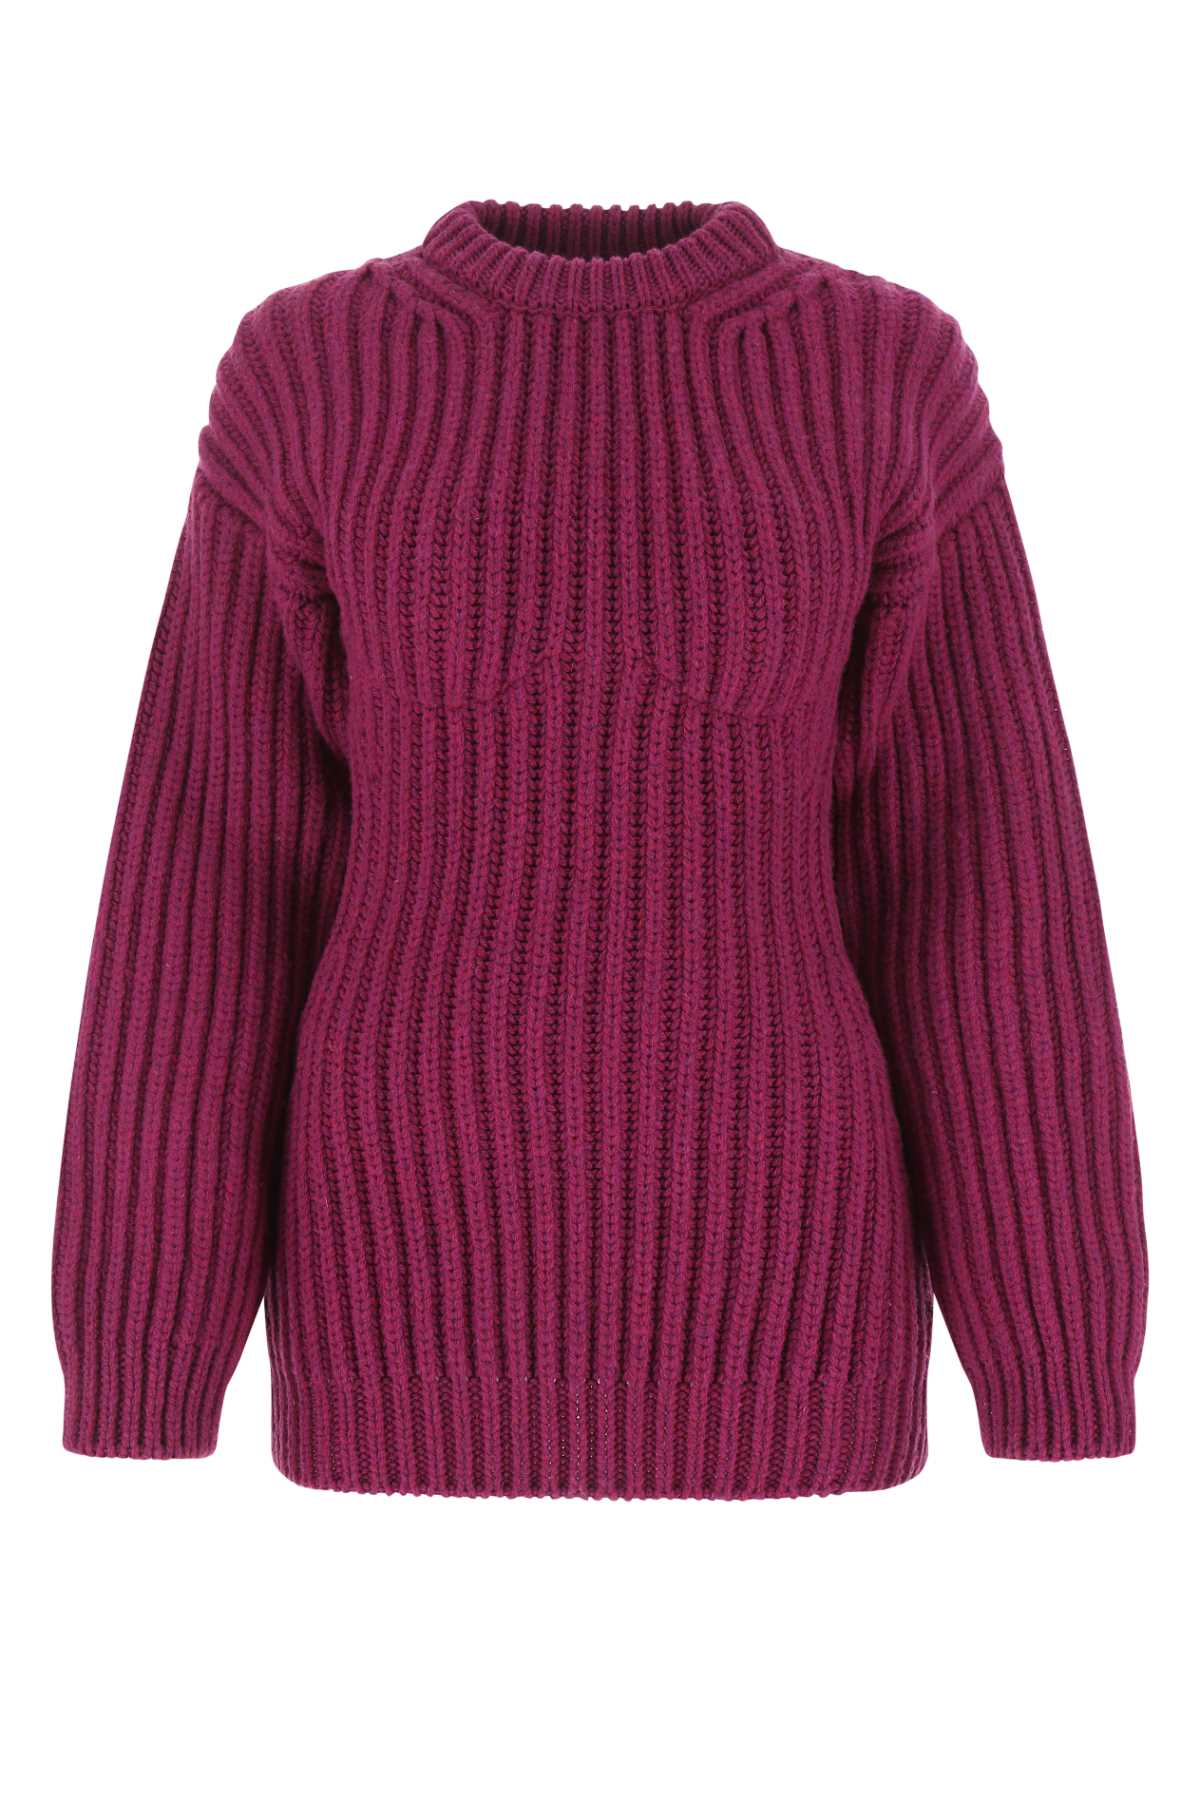 Prada Tyrian Purple Wool Sweater